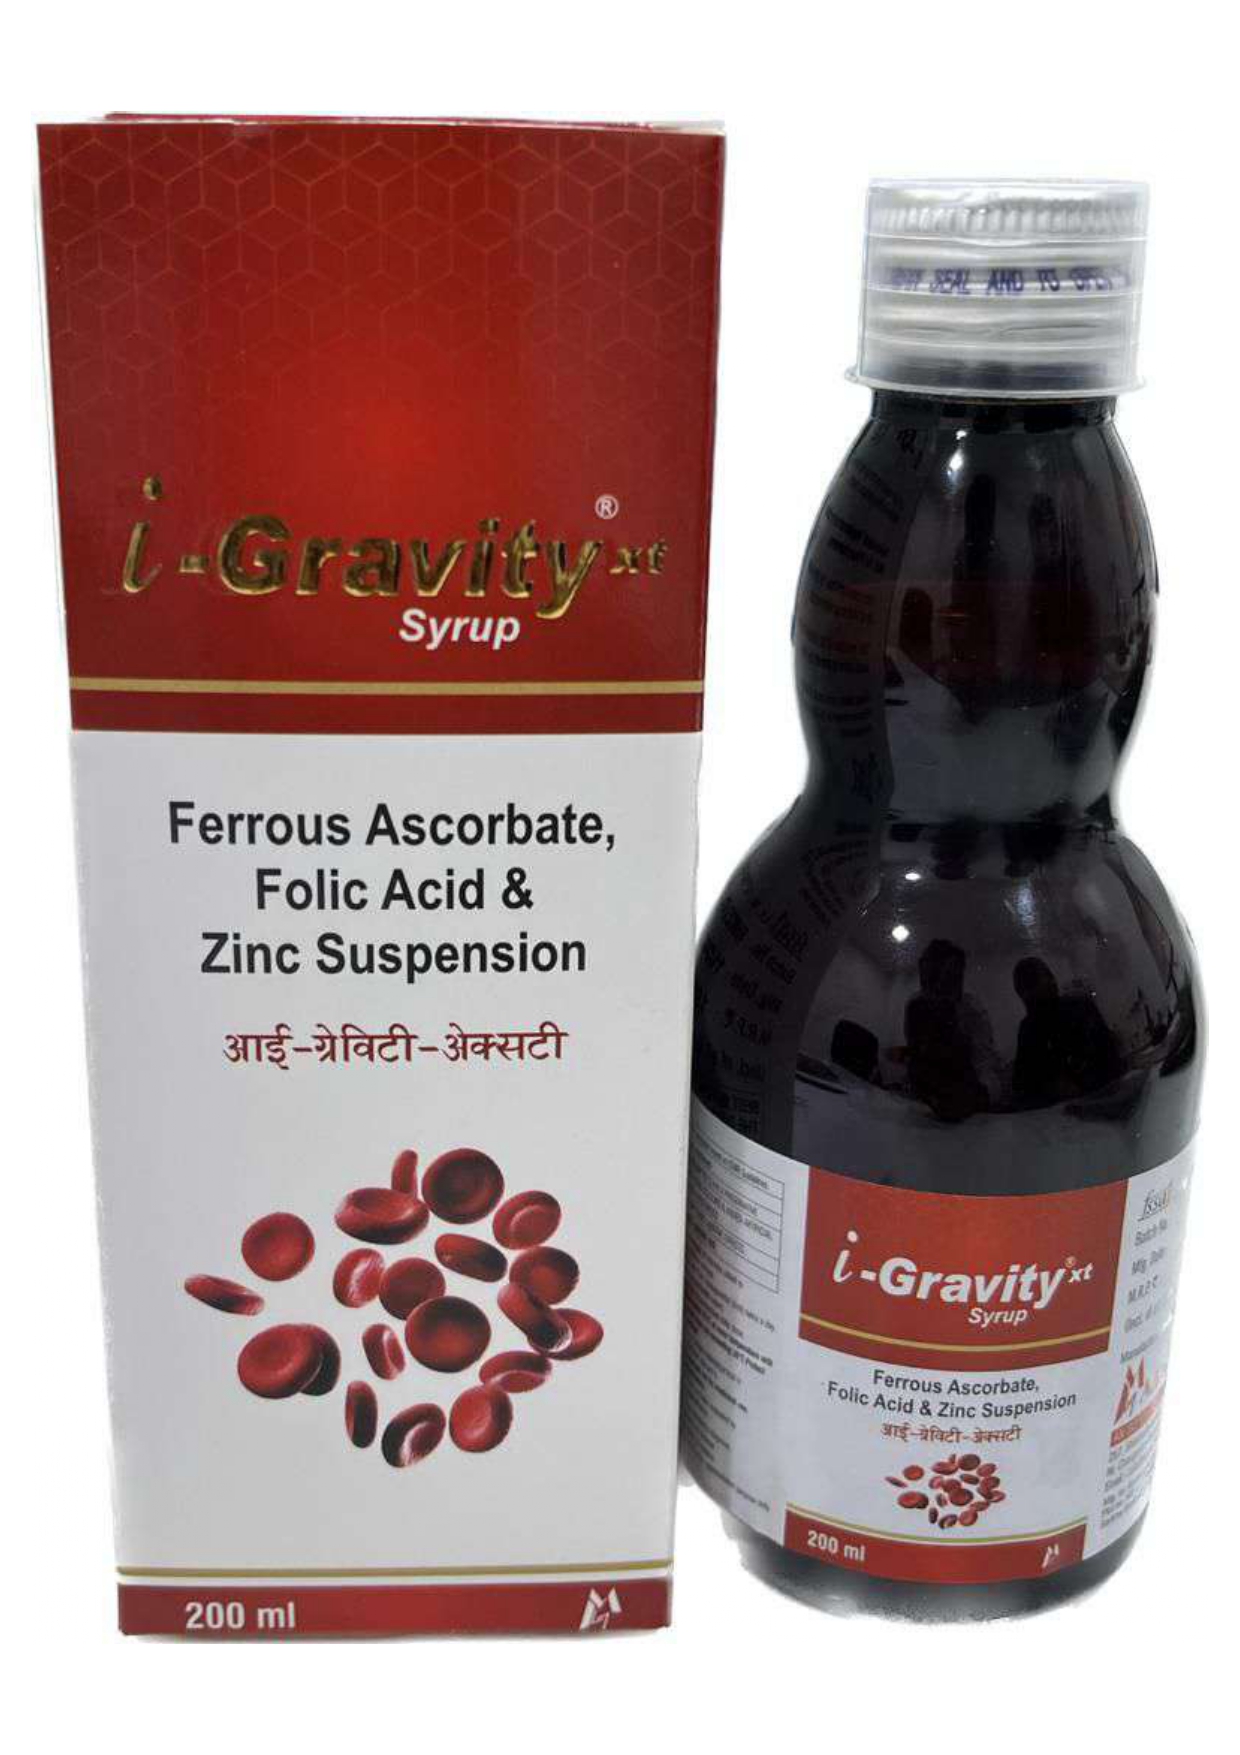 ferrous ascorbate + folic acid
syrup